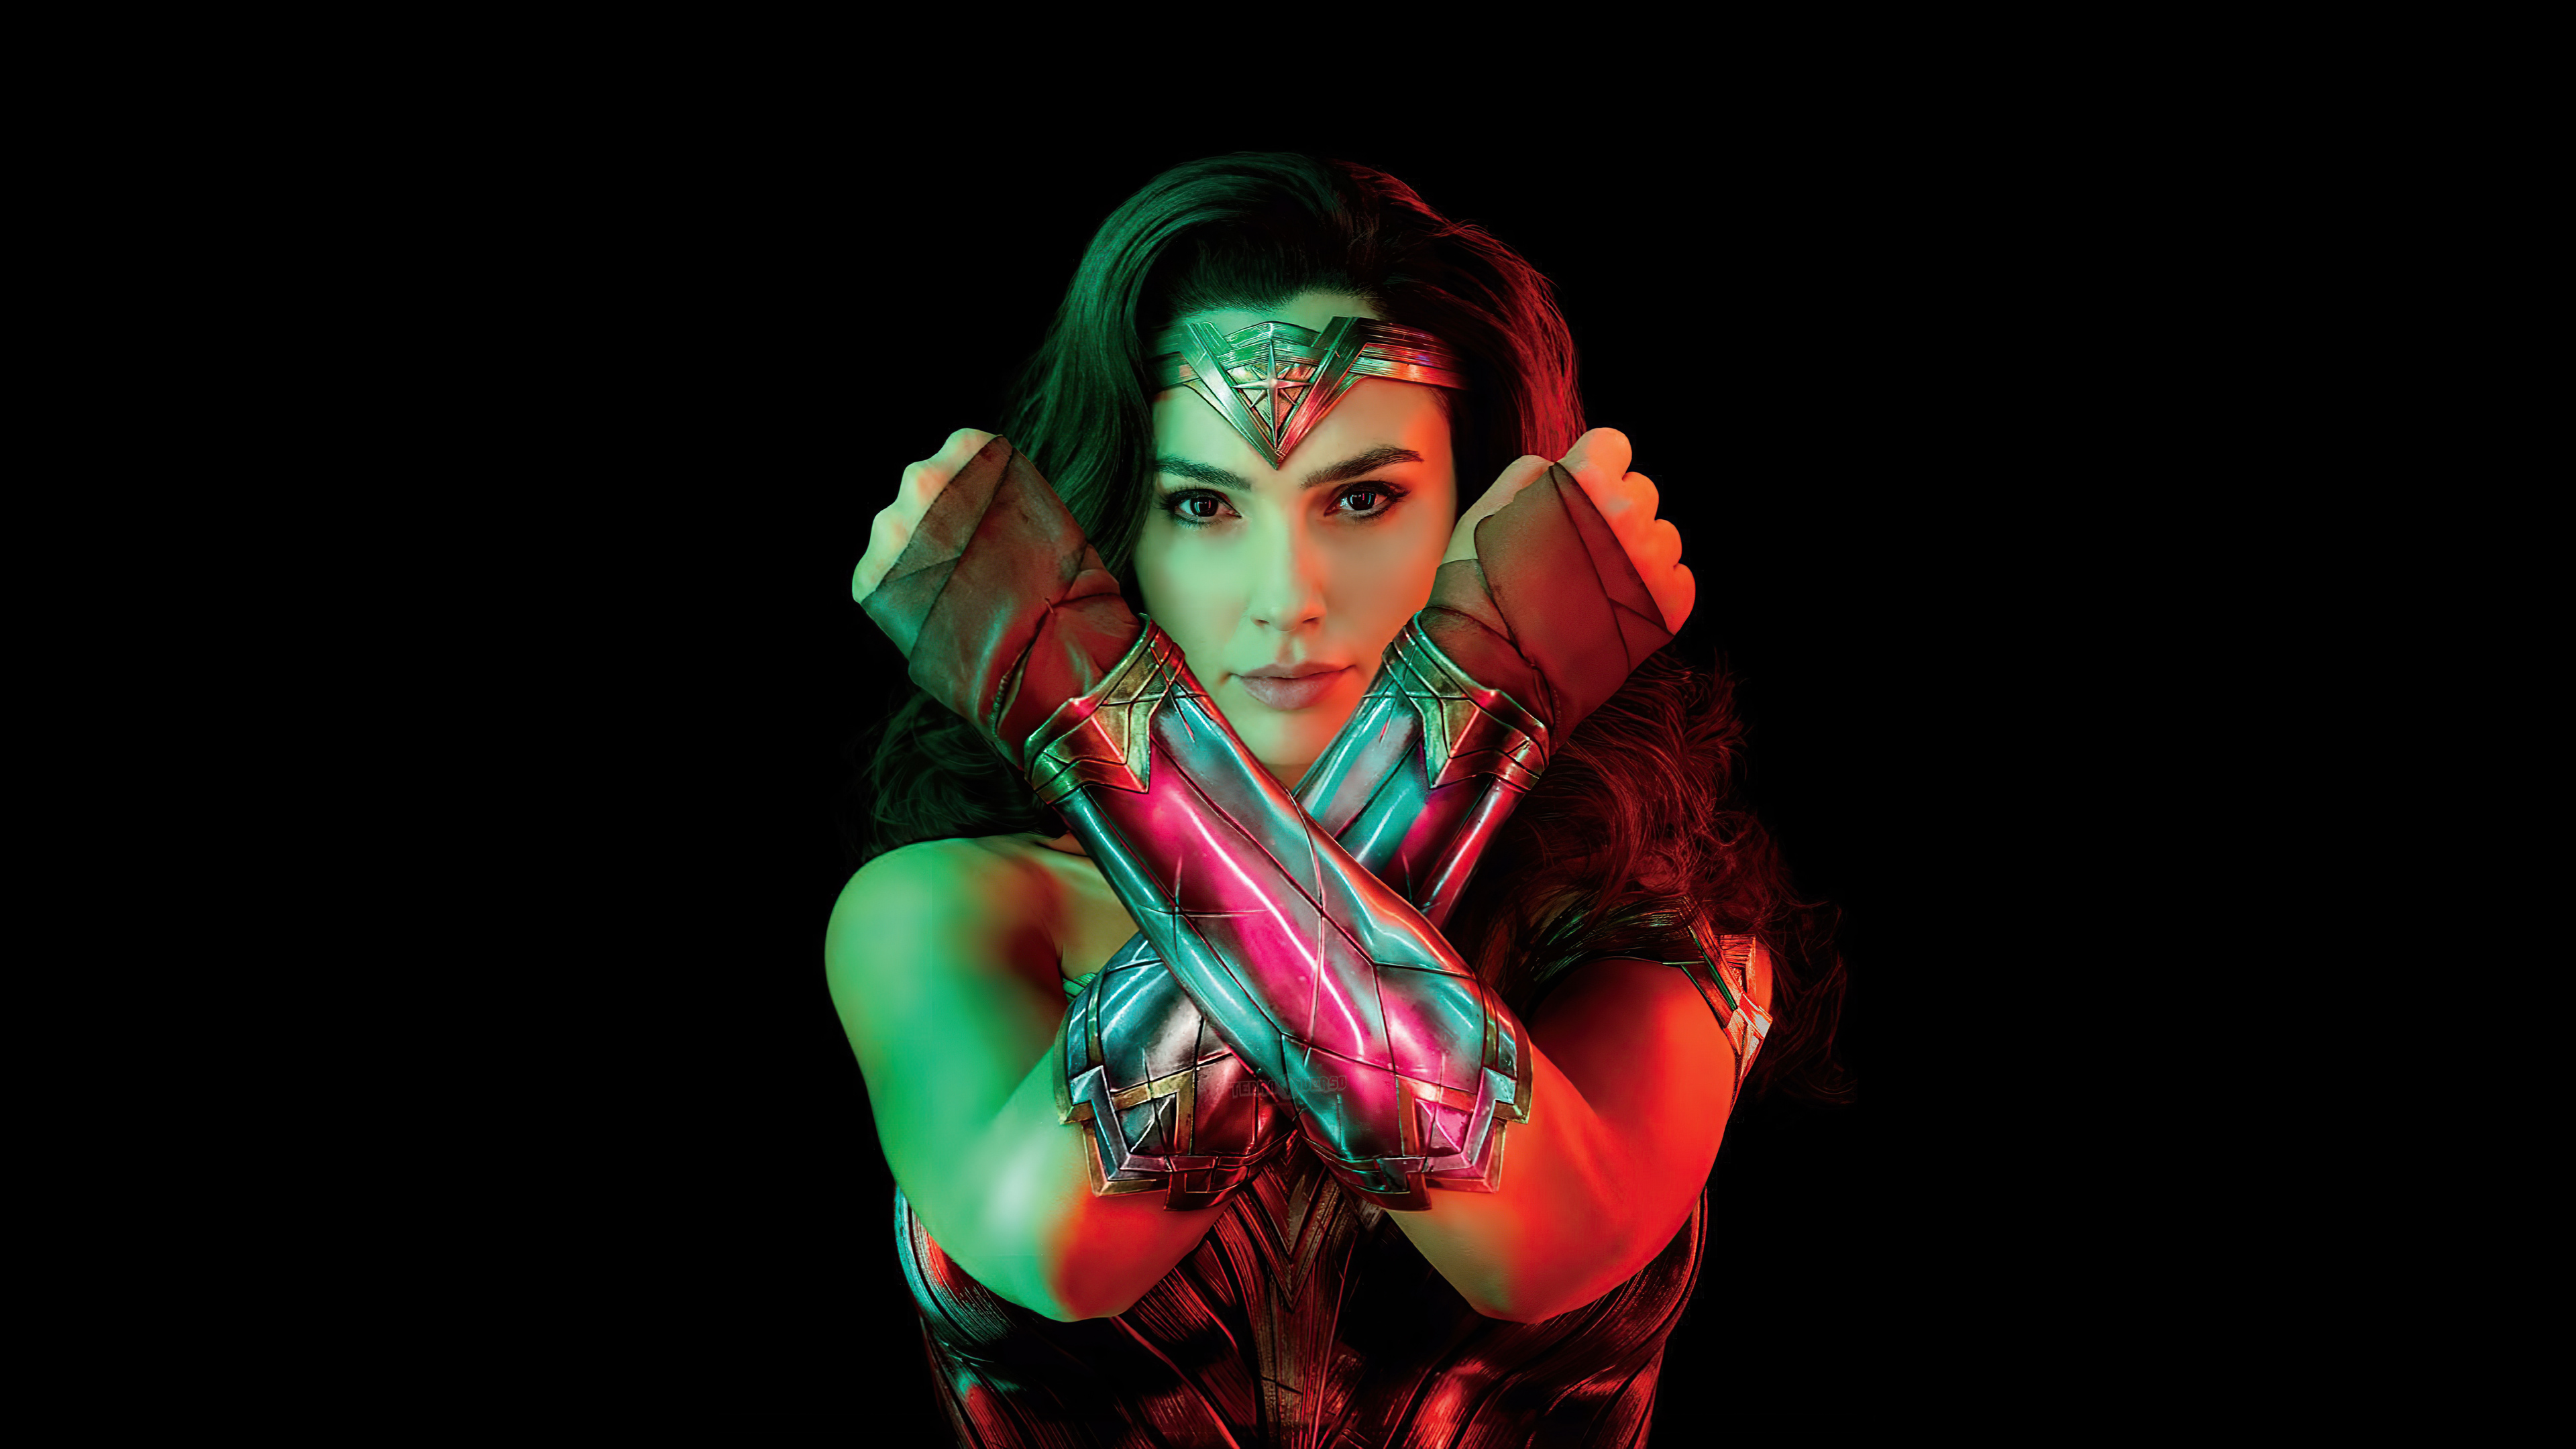 Wonder Woman 1984 Dc Poster Wallpapers